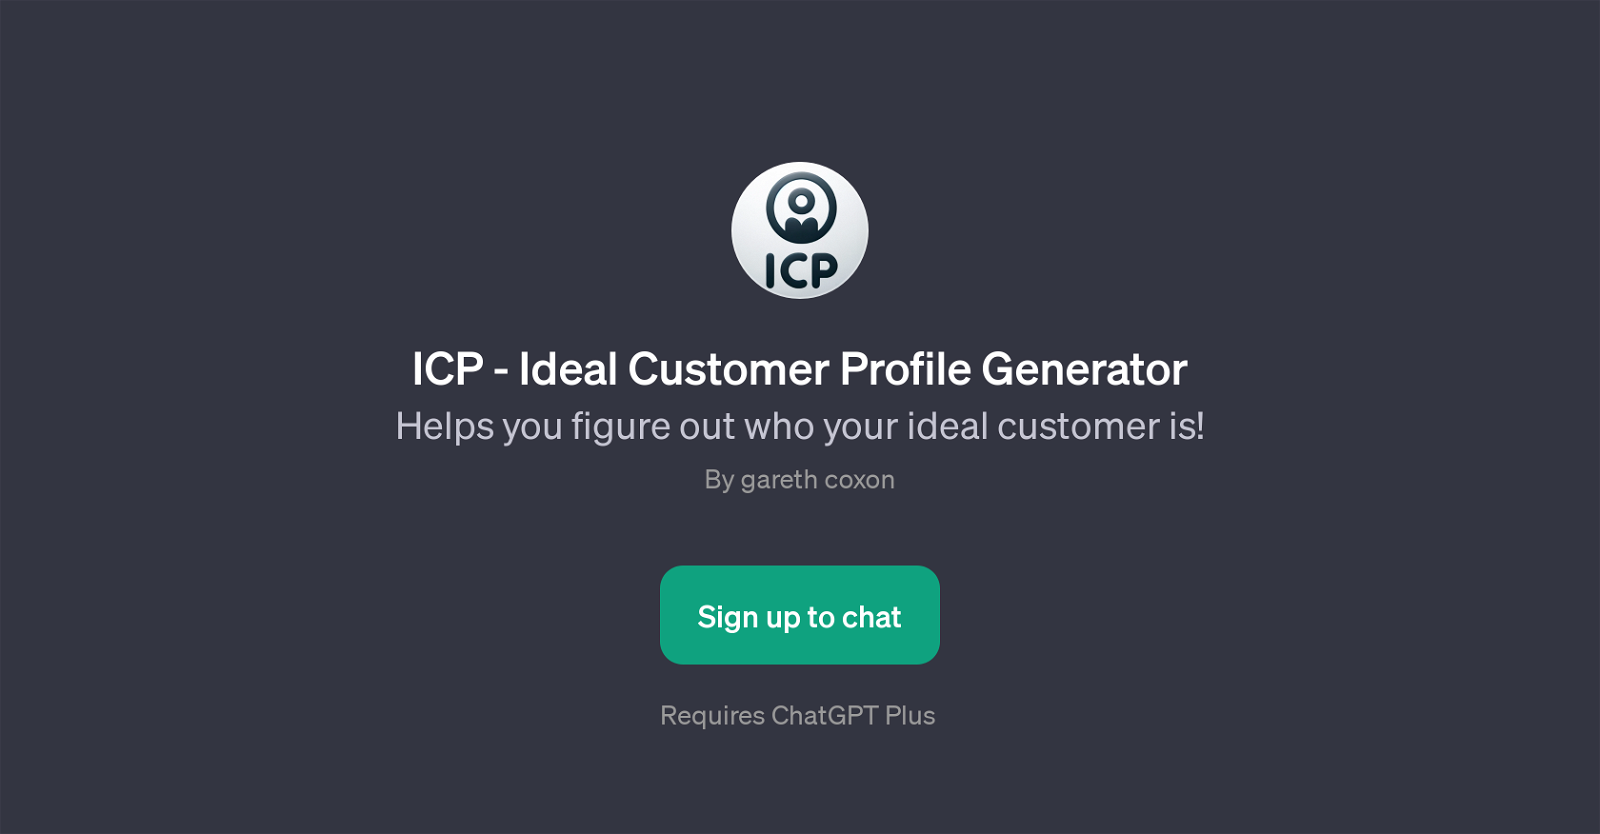 ICP - Ideal Customer Profile Generator website